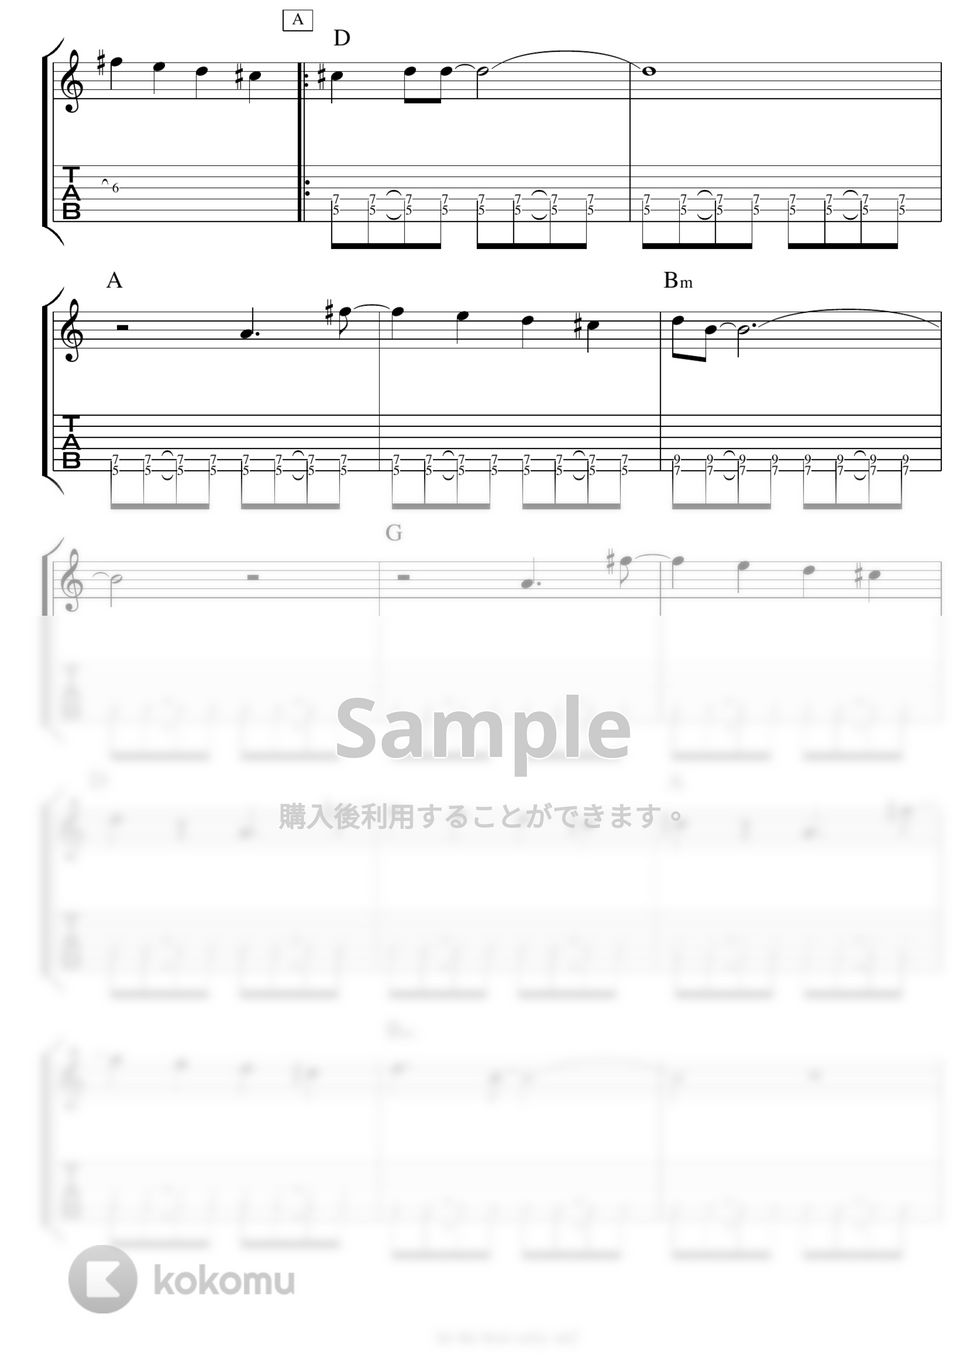 kenyokoyama - let the beat carry on ギター演奏動画付TAB譜 by バイトーン音楽教室